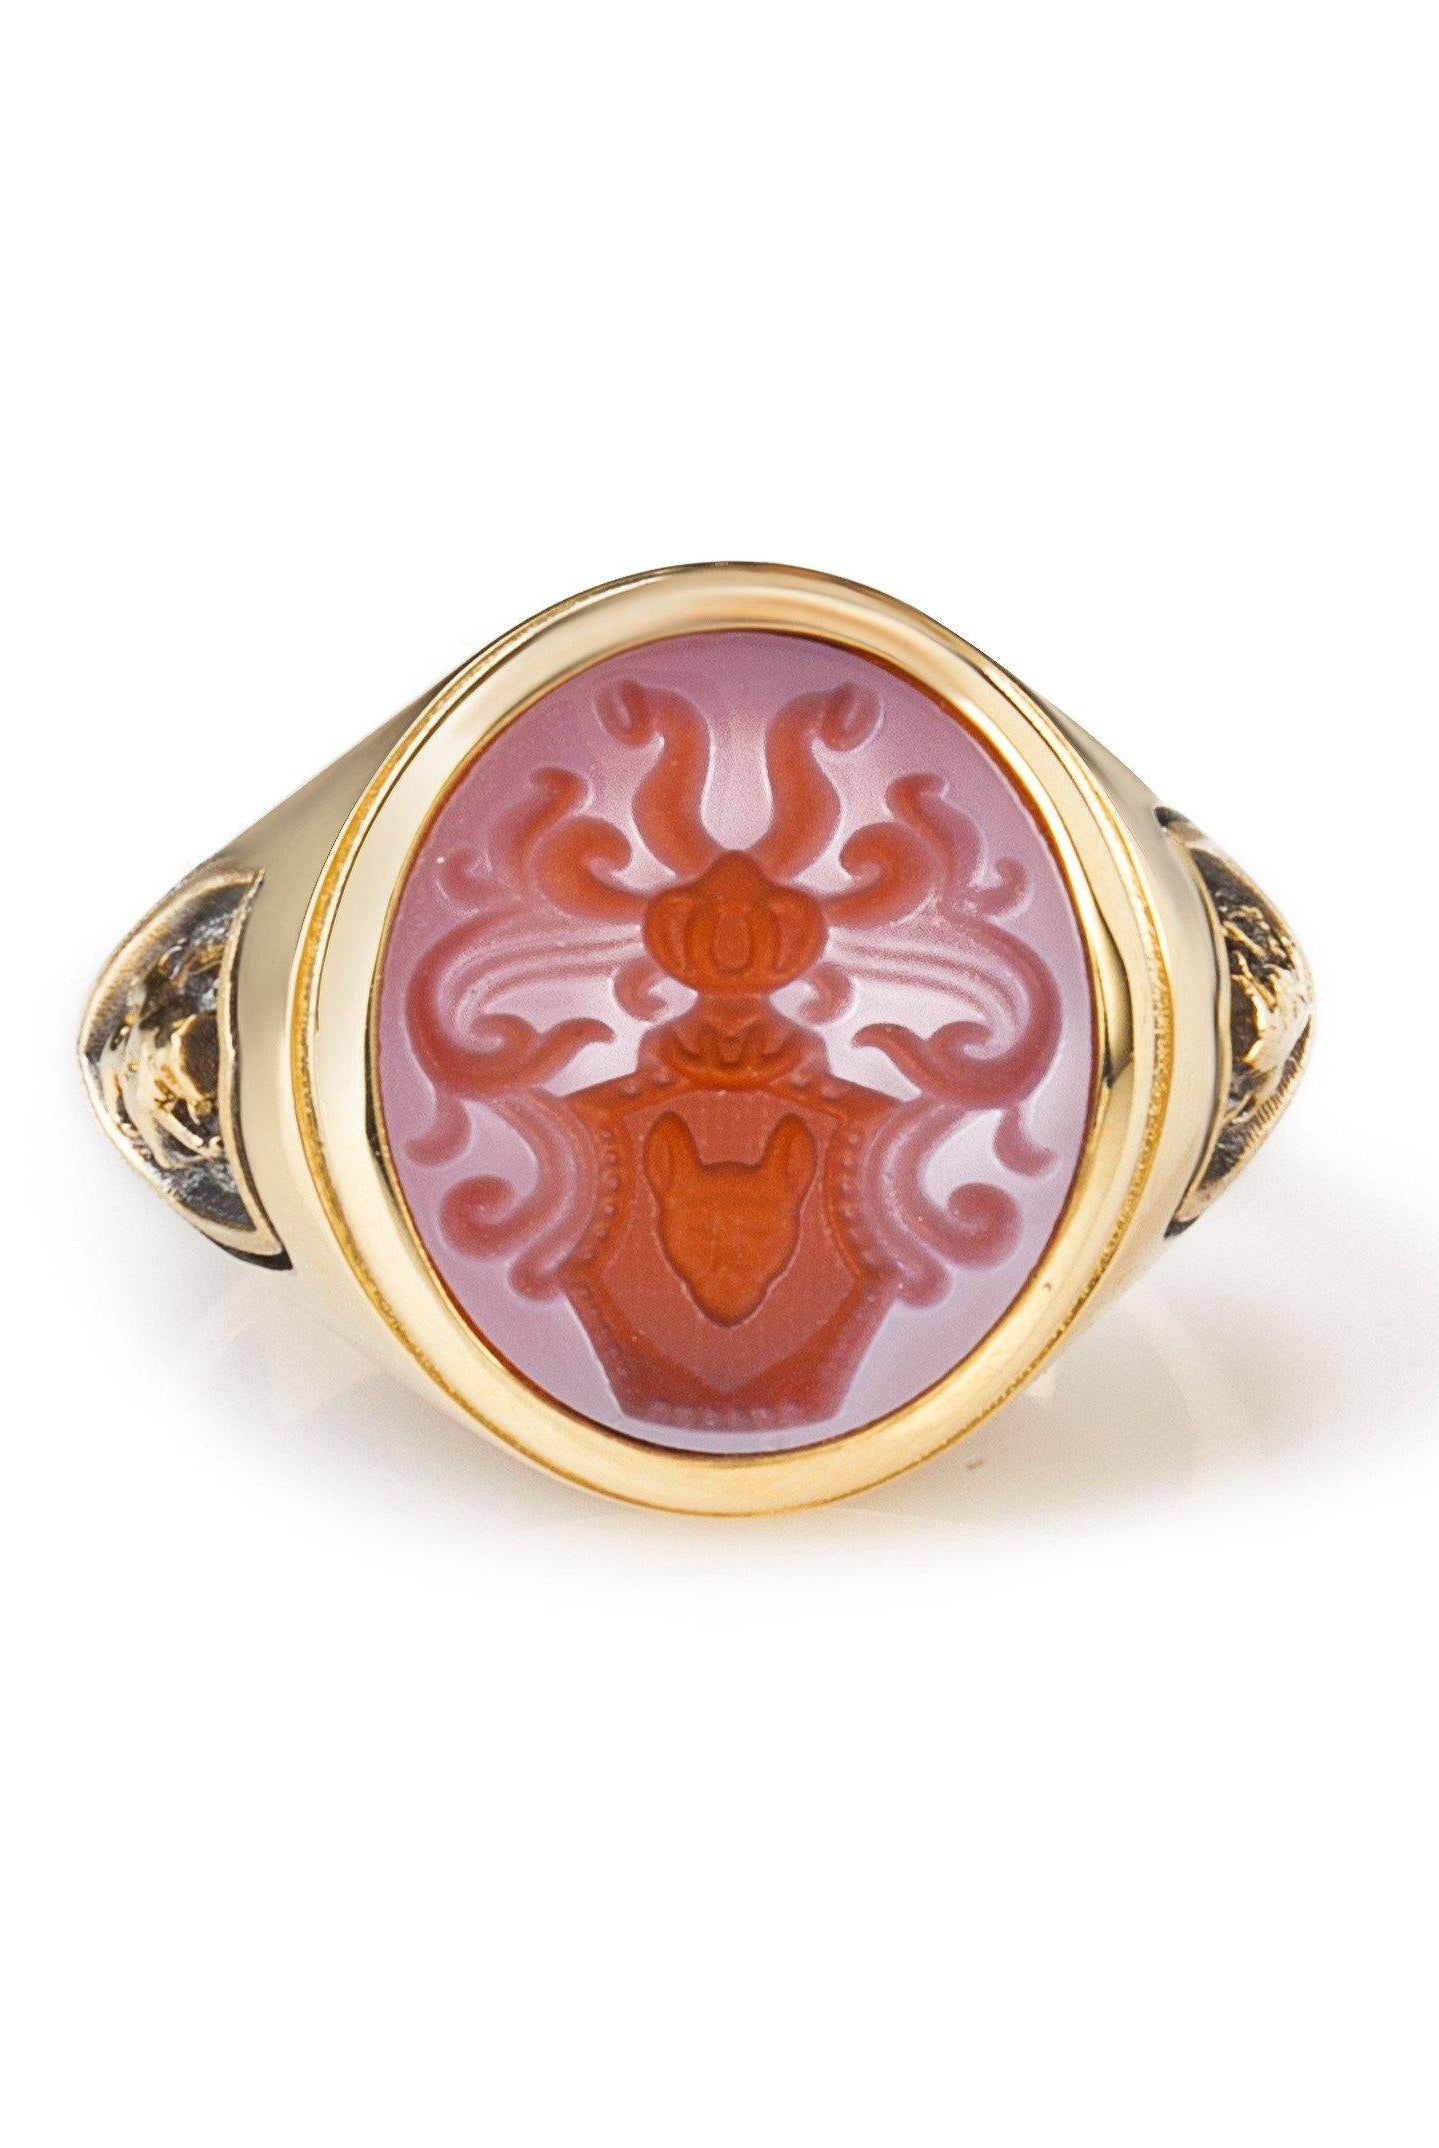 ORANGE AGATE CREST RING - Danelian Jewelry